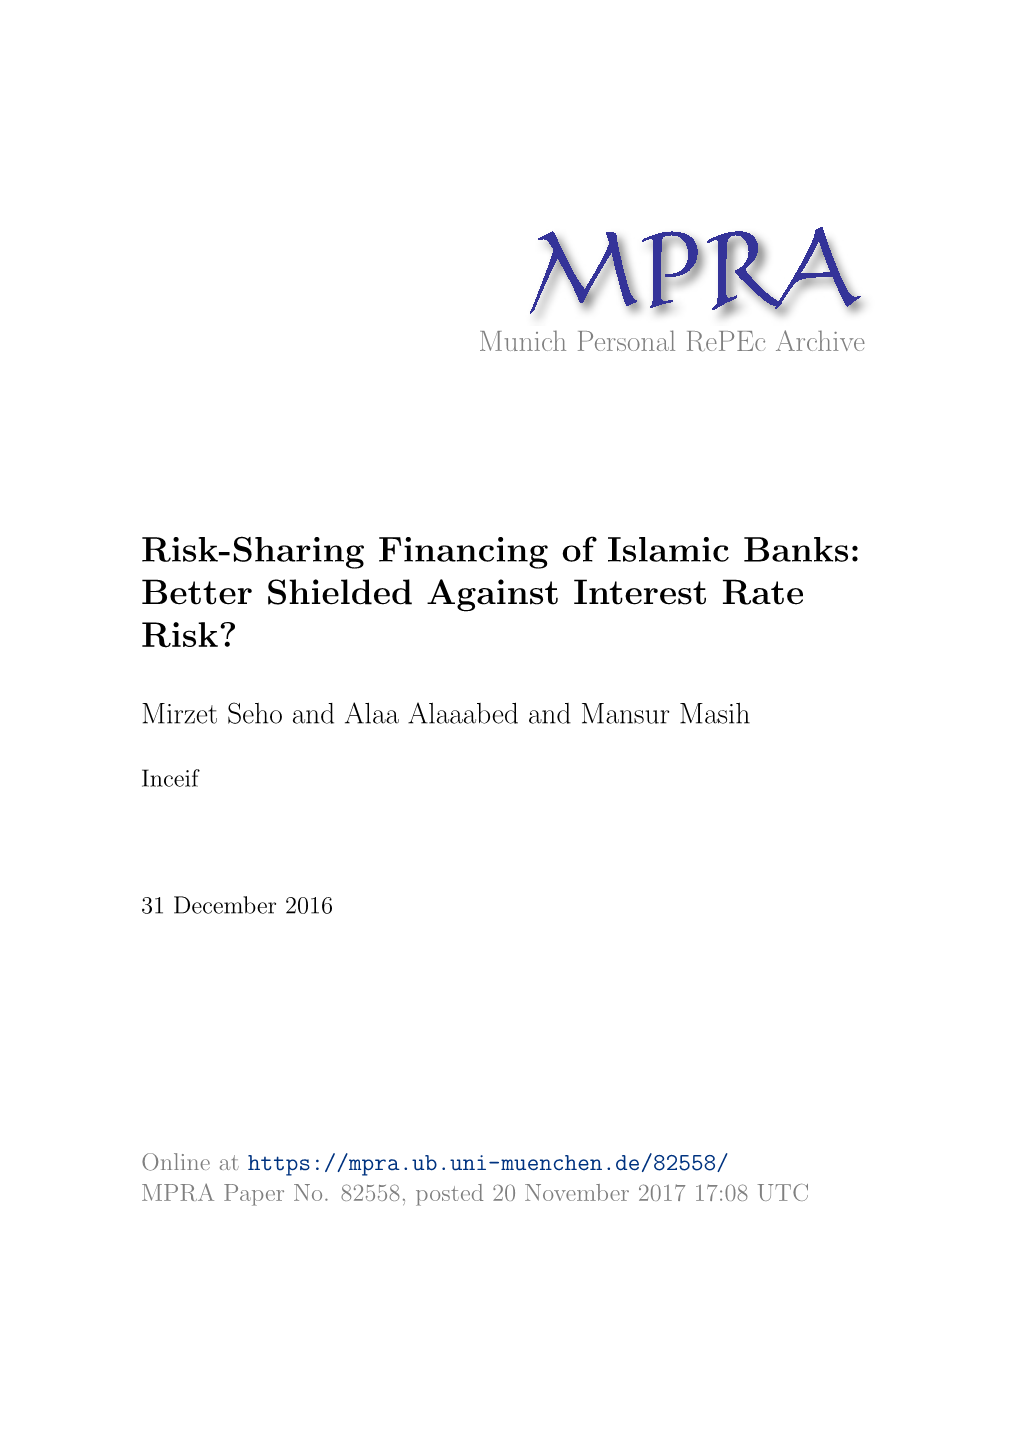 Risk-Sharing Financing of Islamic Banks: Better Shielded Against Interest Rate Risk?